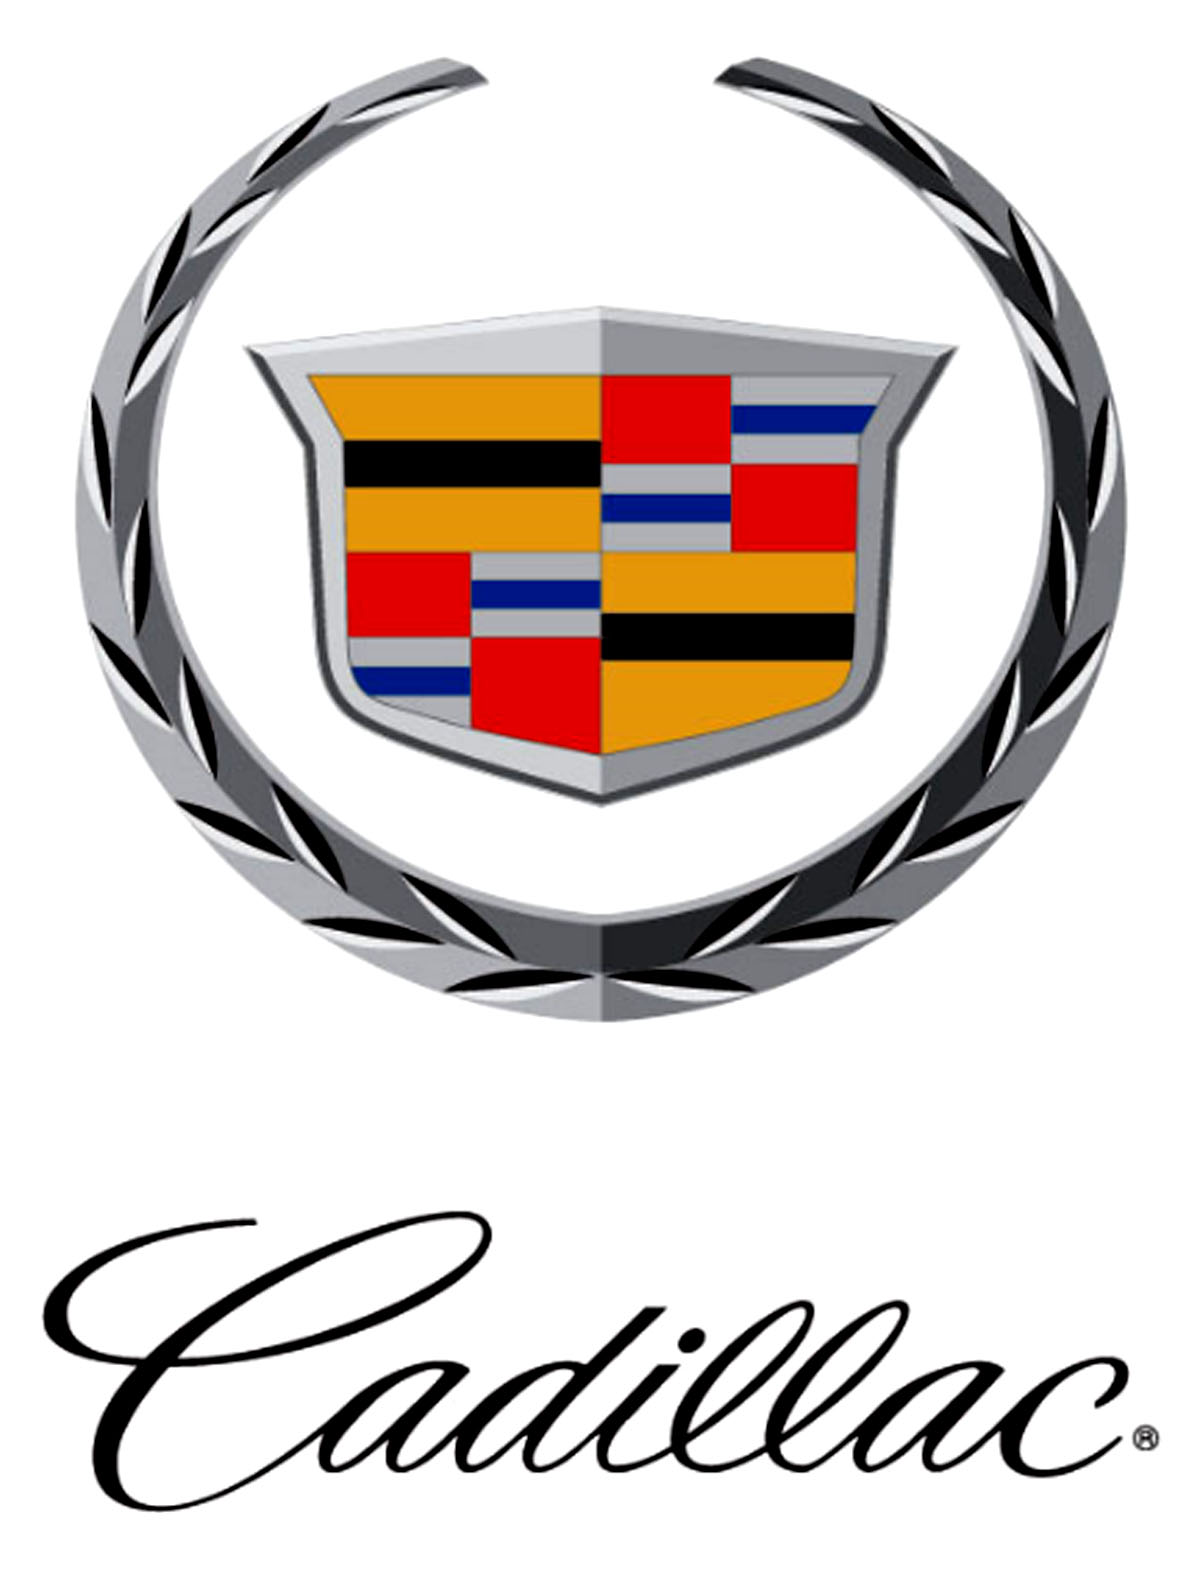 Cadillac | History and development Cadillac | The logo Cadillac